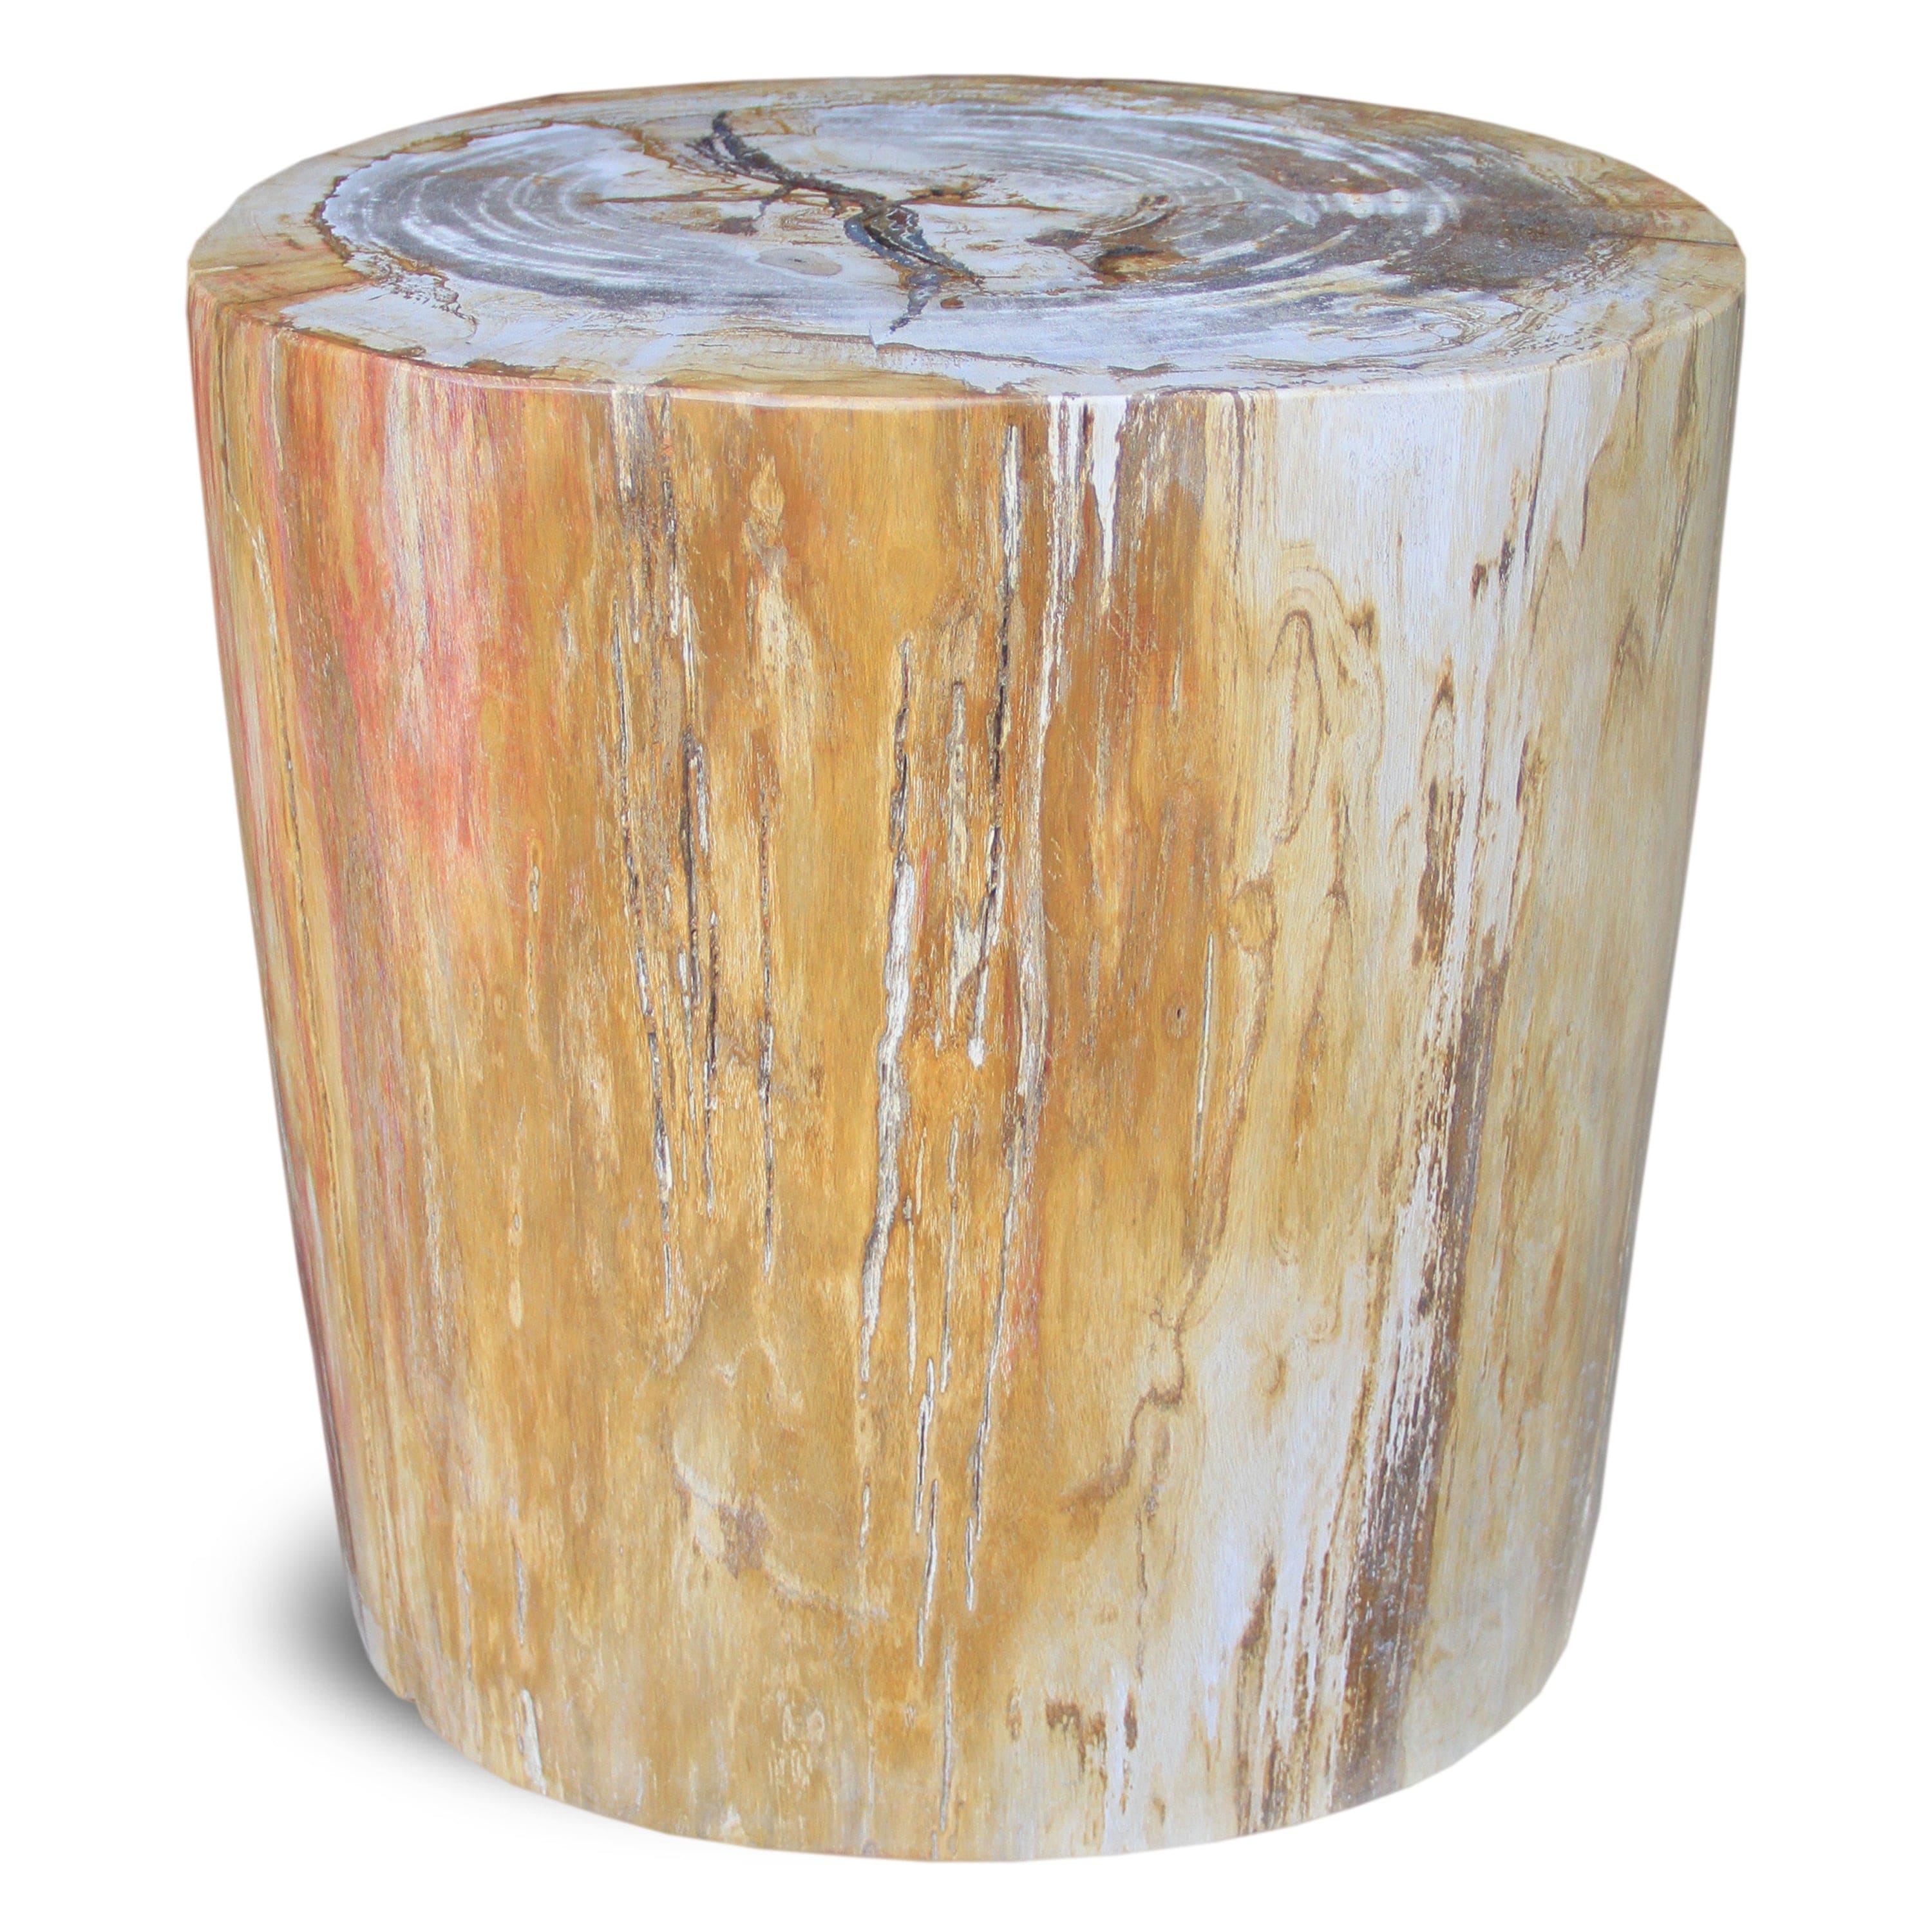 Kalifano Petrified Wood Polished Petrified Wood Stump from Indonesia - 16" / 192 lbs PWS3480.001